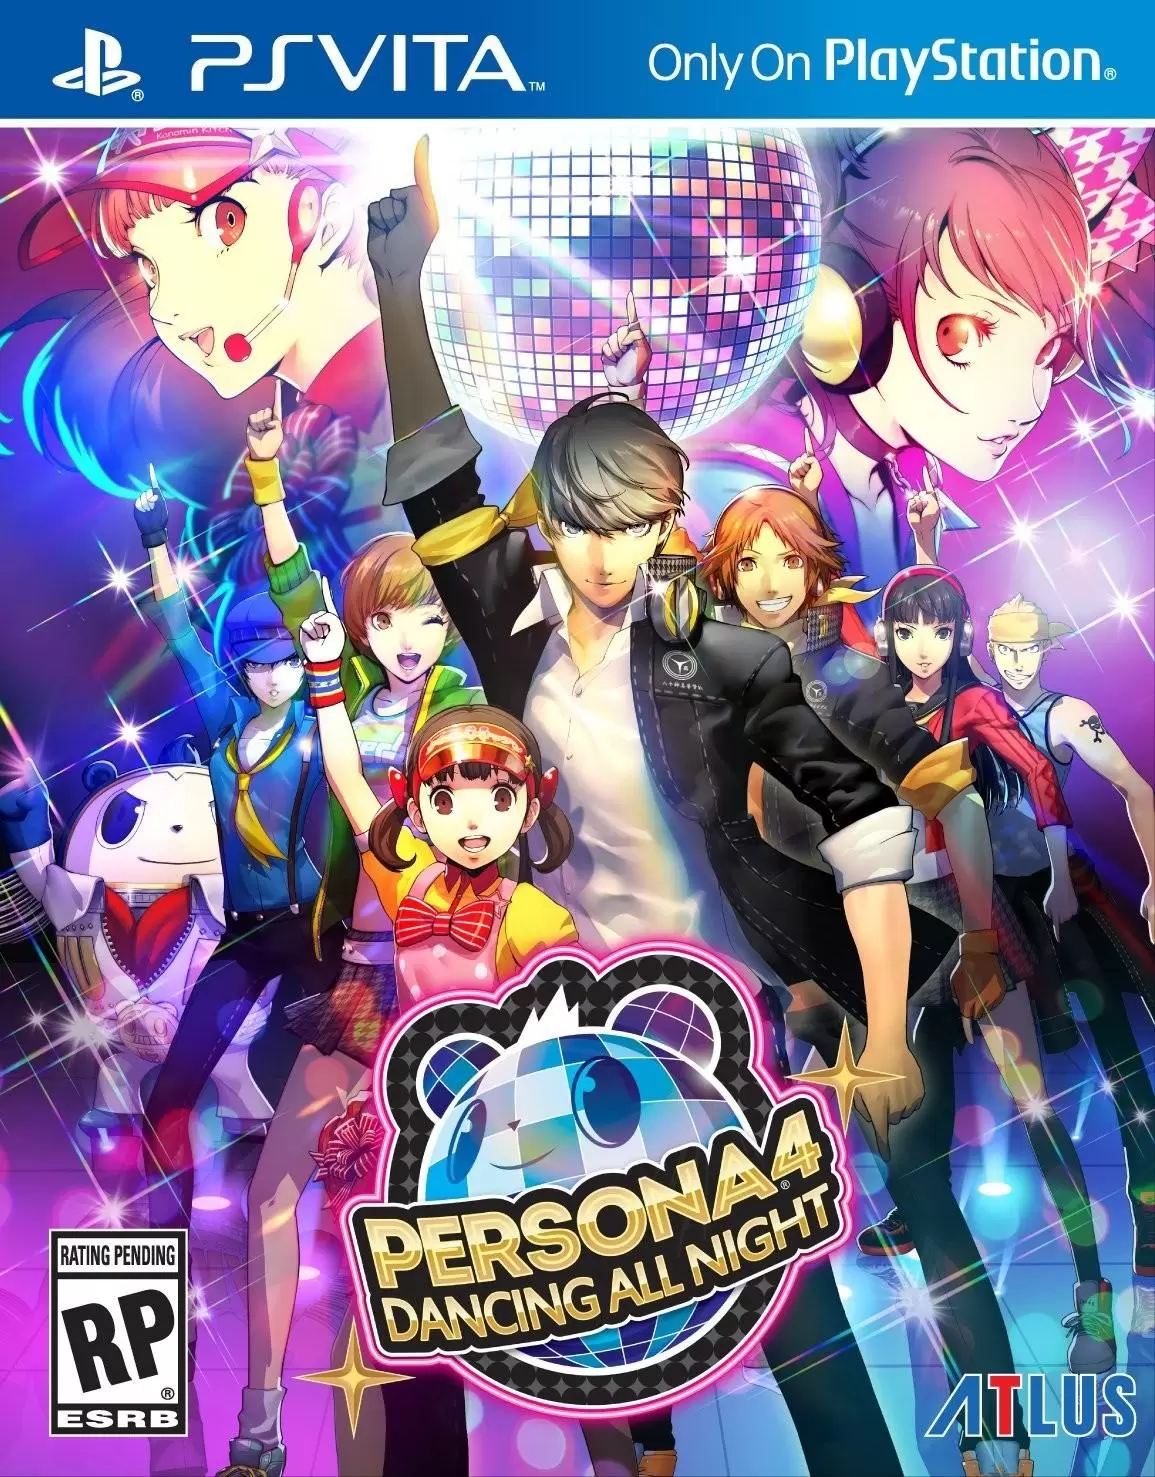 PS Vita Games - Persona 4: Dancing All Night